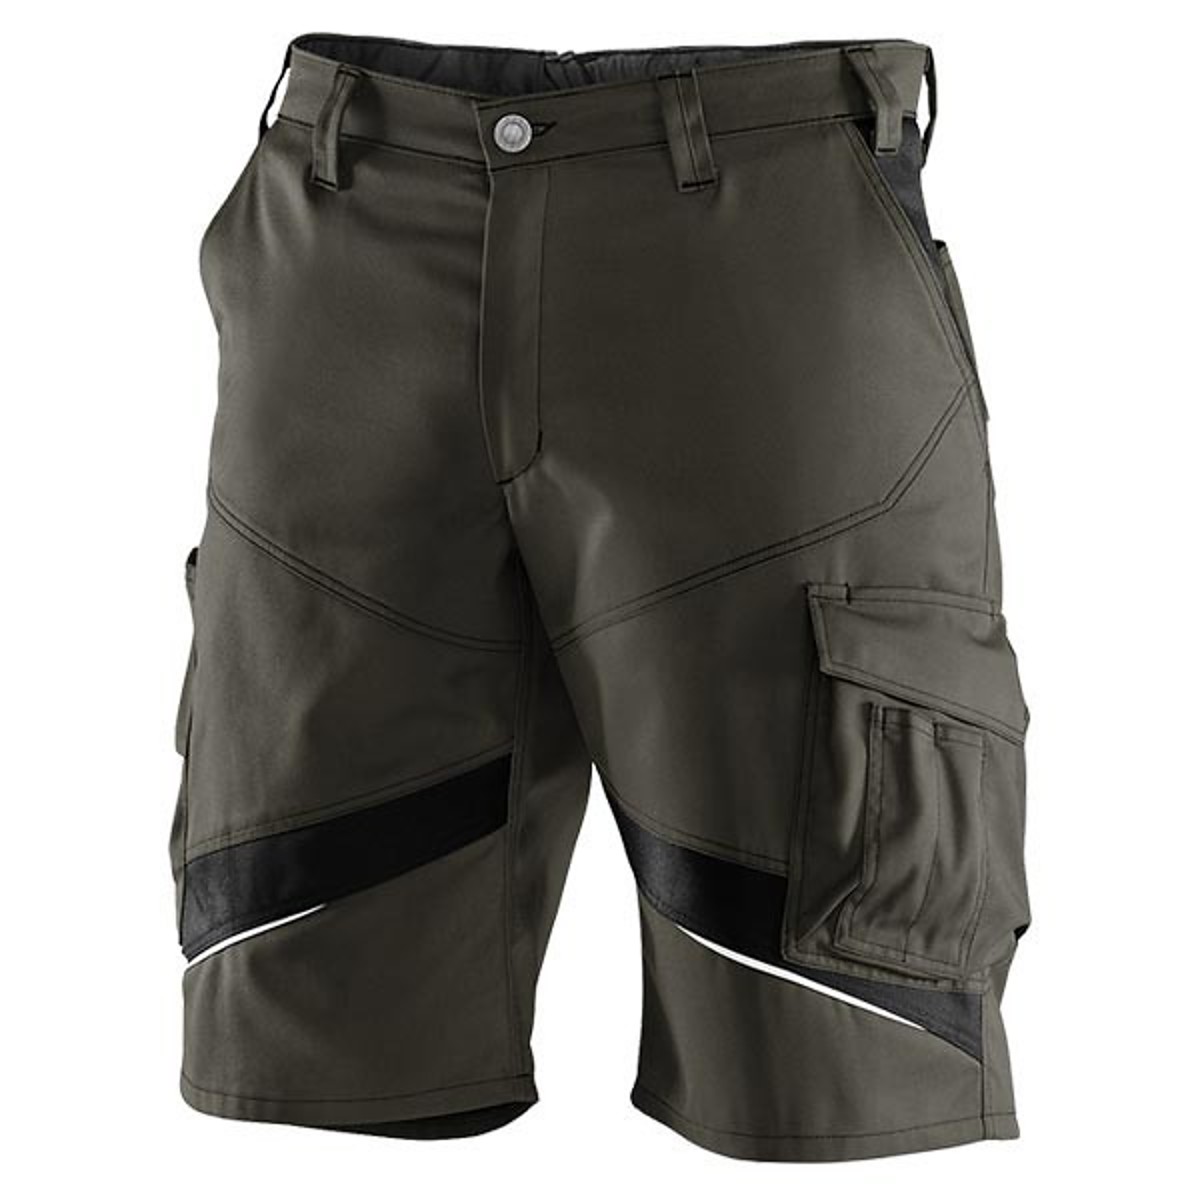 Kübler Activiq Shorts - 6